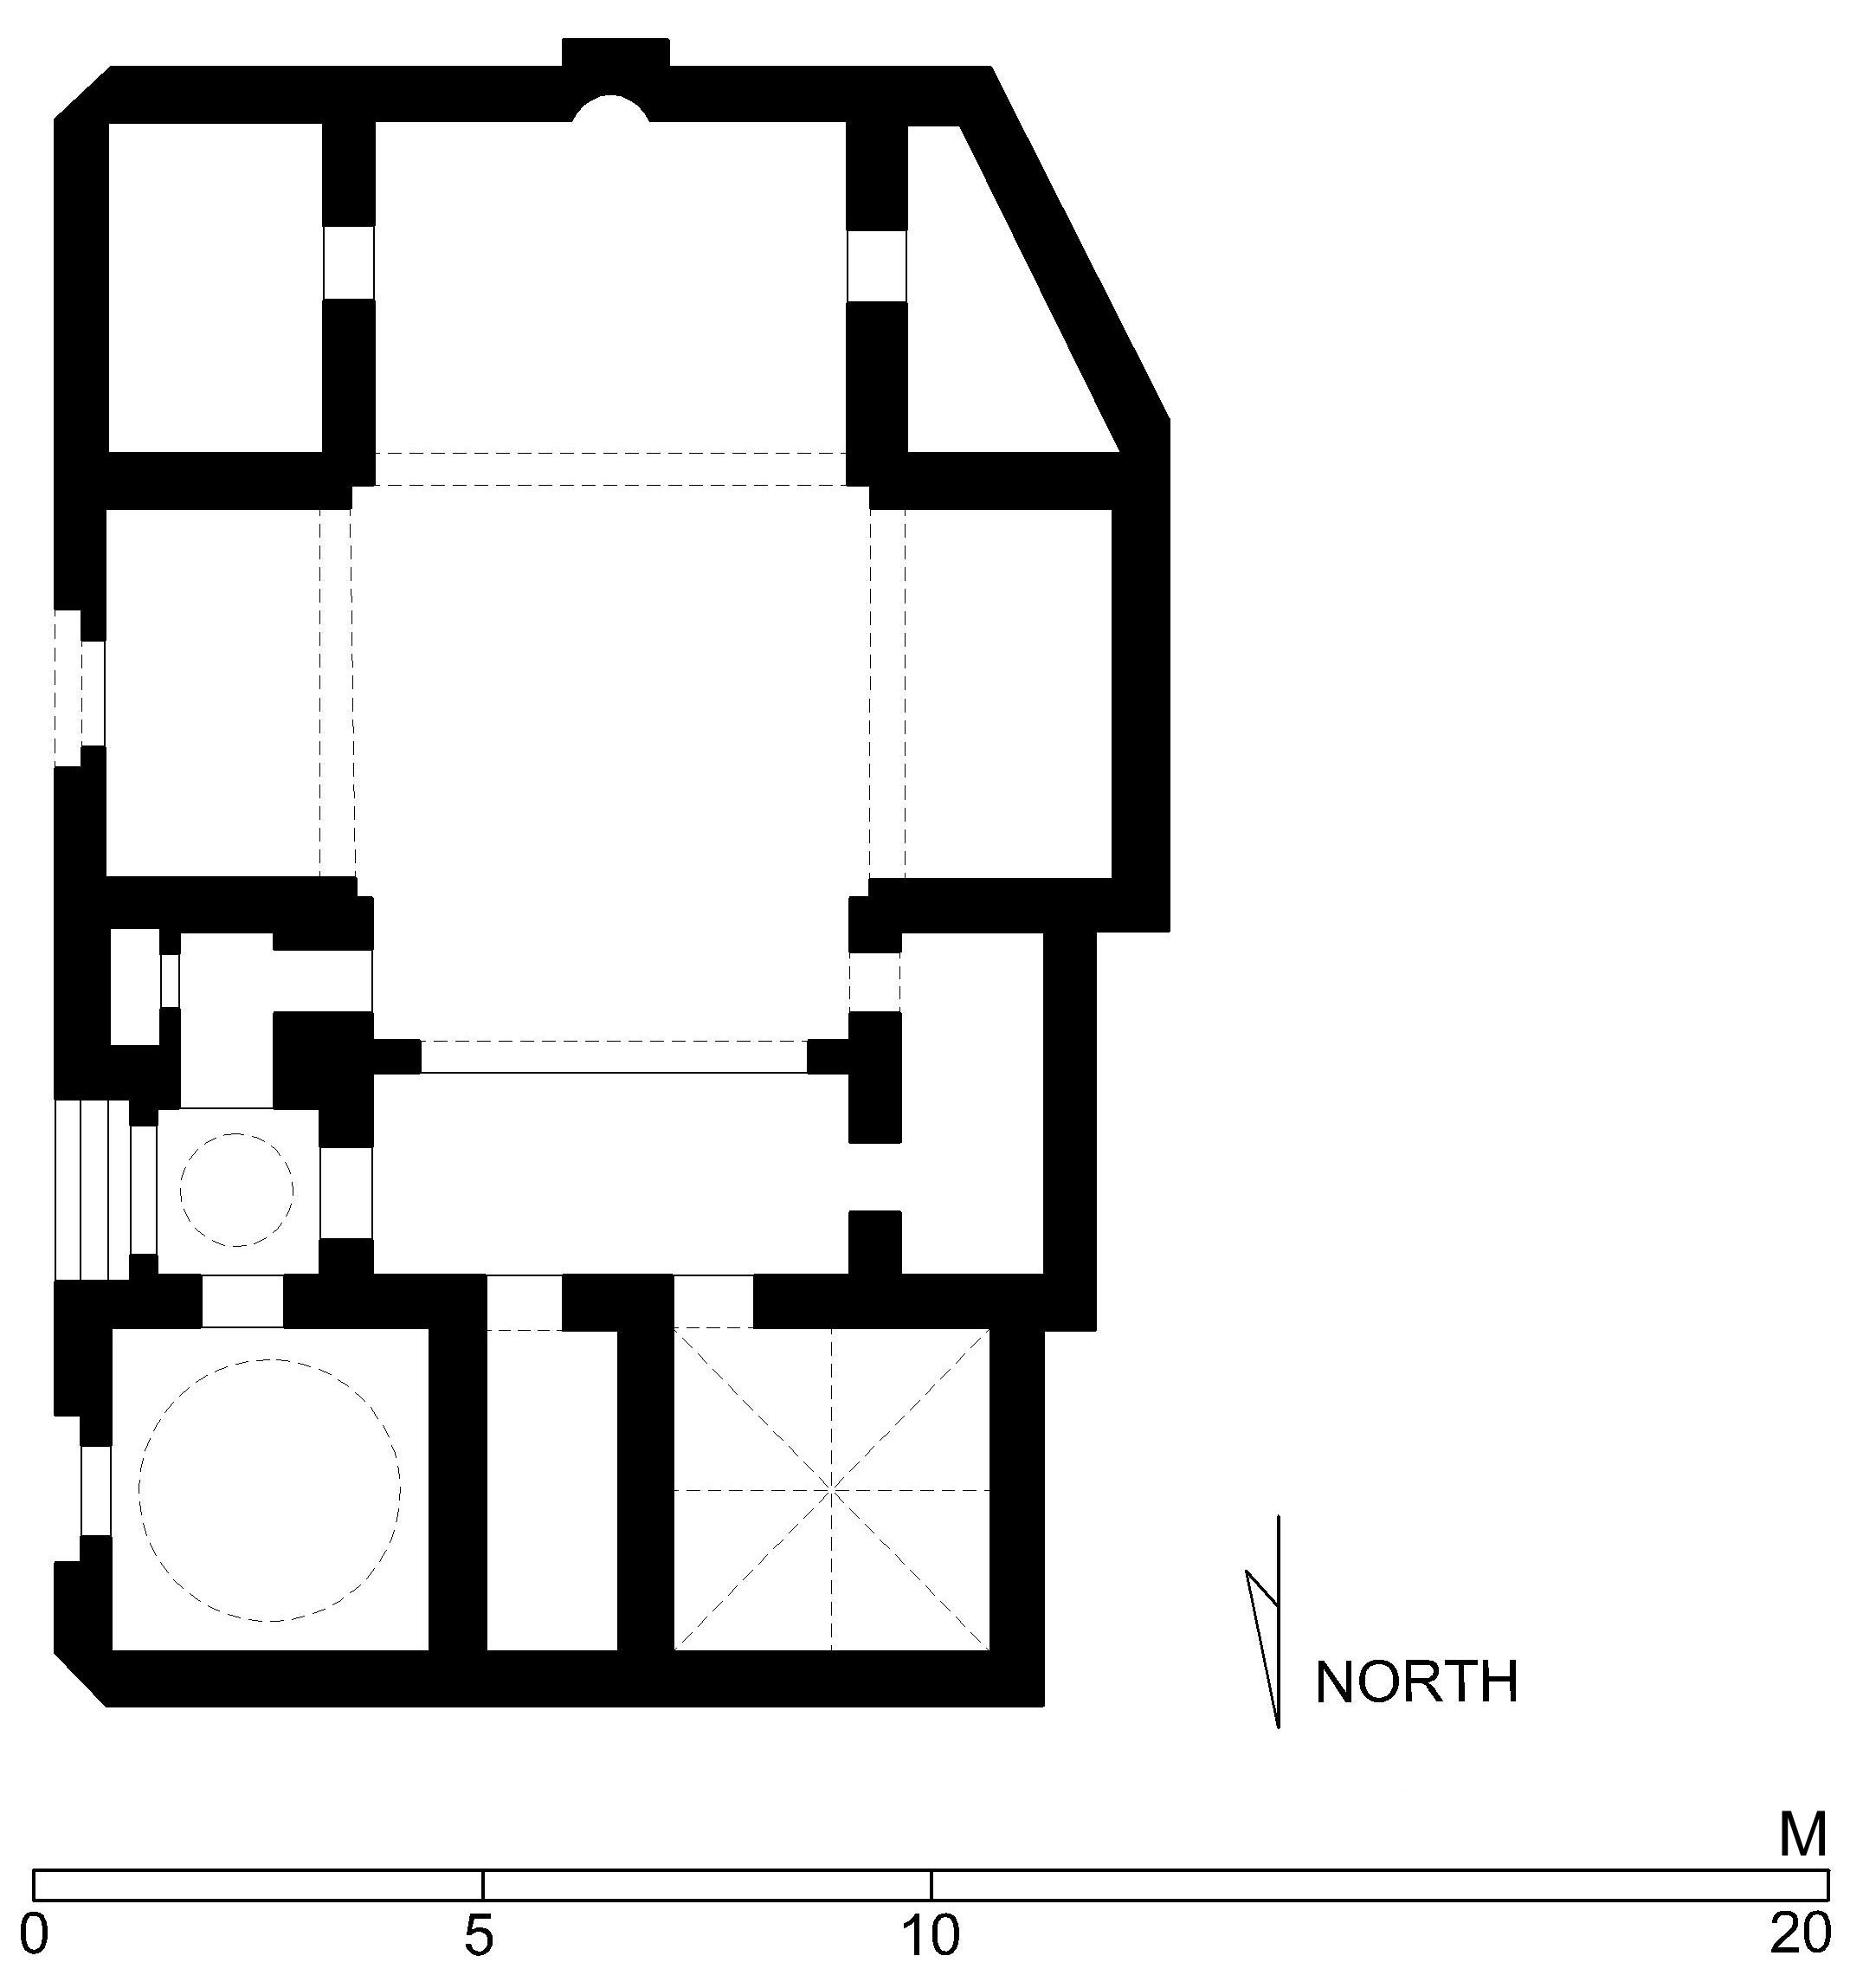 Floor plan of funerary madrasa (after Meinecke)